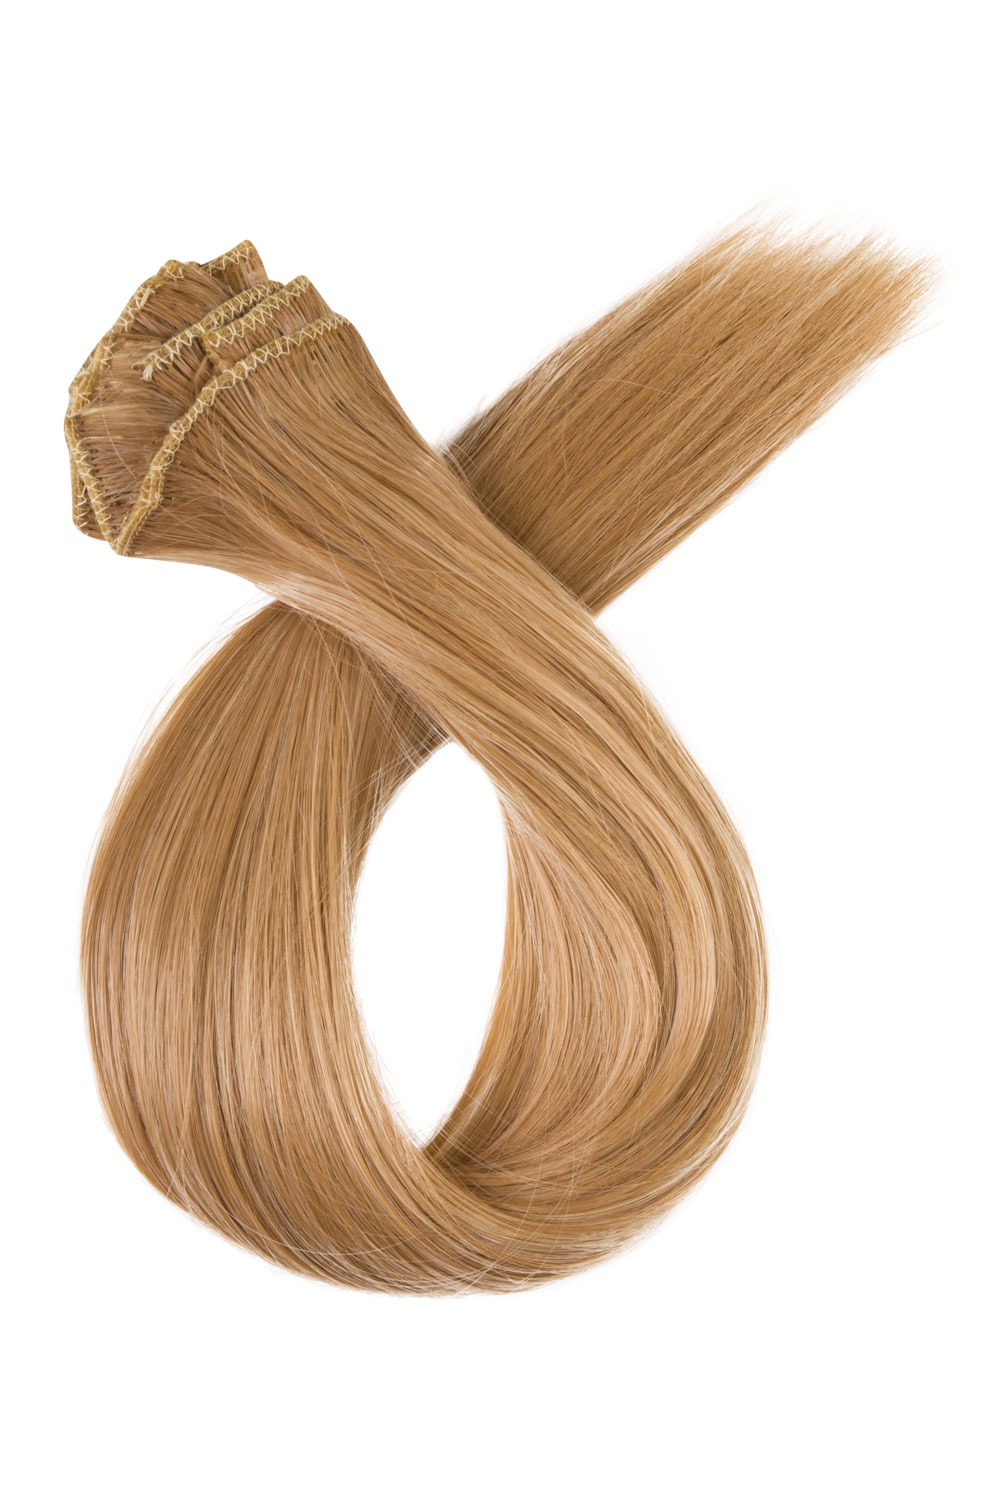 Svetlé blond clip in vlasy, 70cm, 180g, farba 20